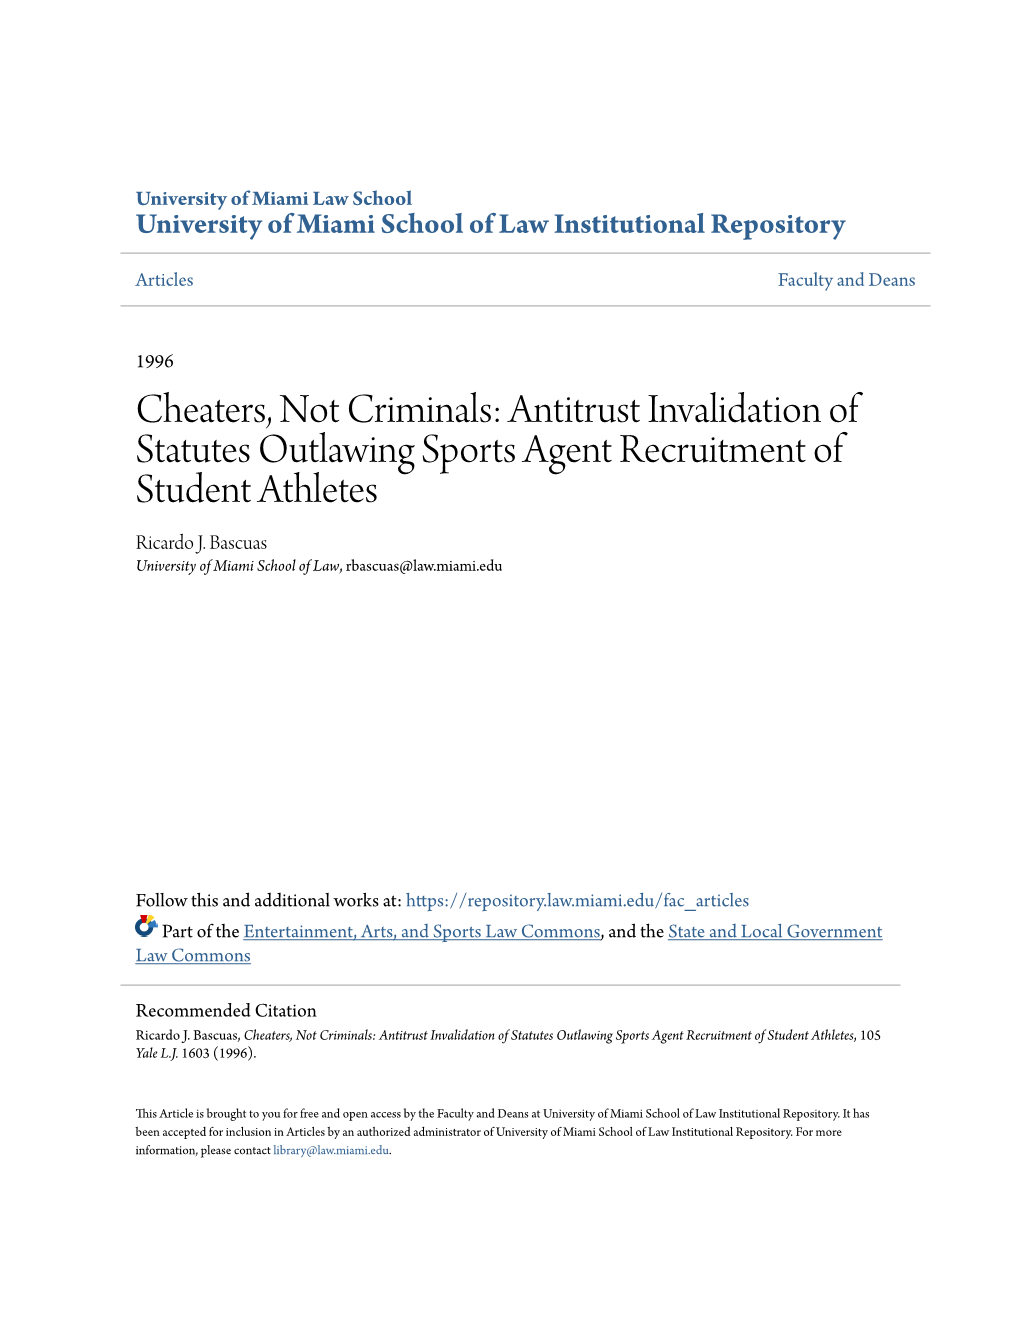 Antitrust Invalidation of Statutes Outlawing Sports Agent Recruitment of Student Athletes Ricardo J